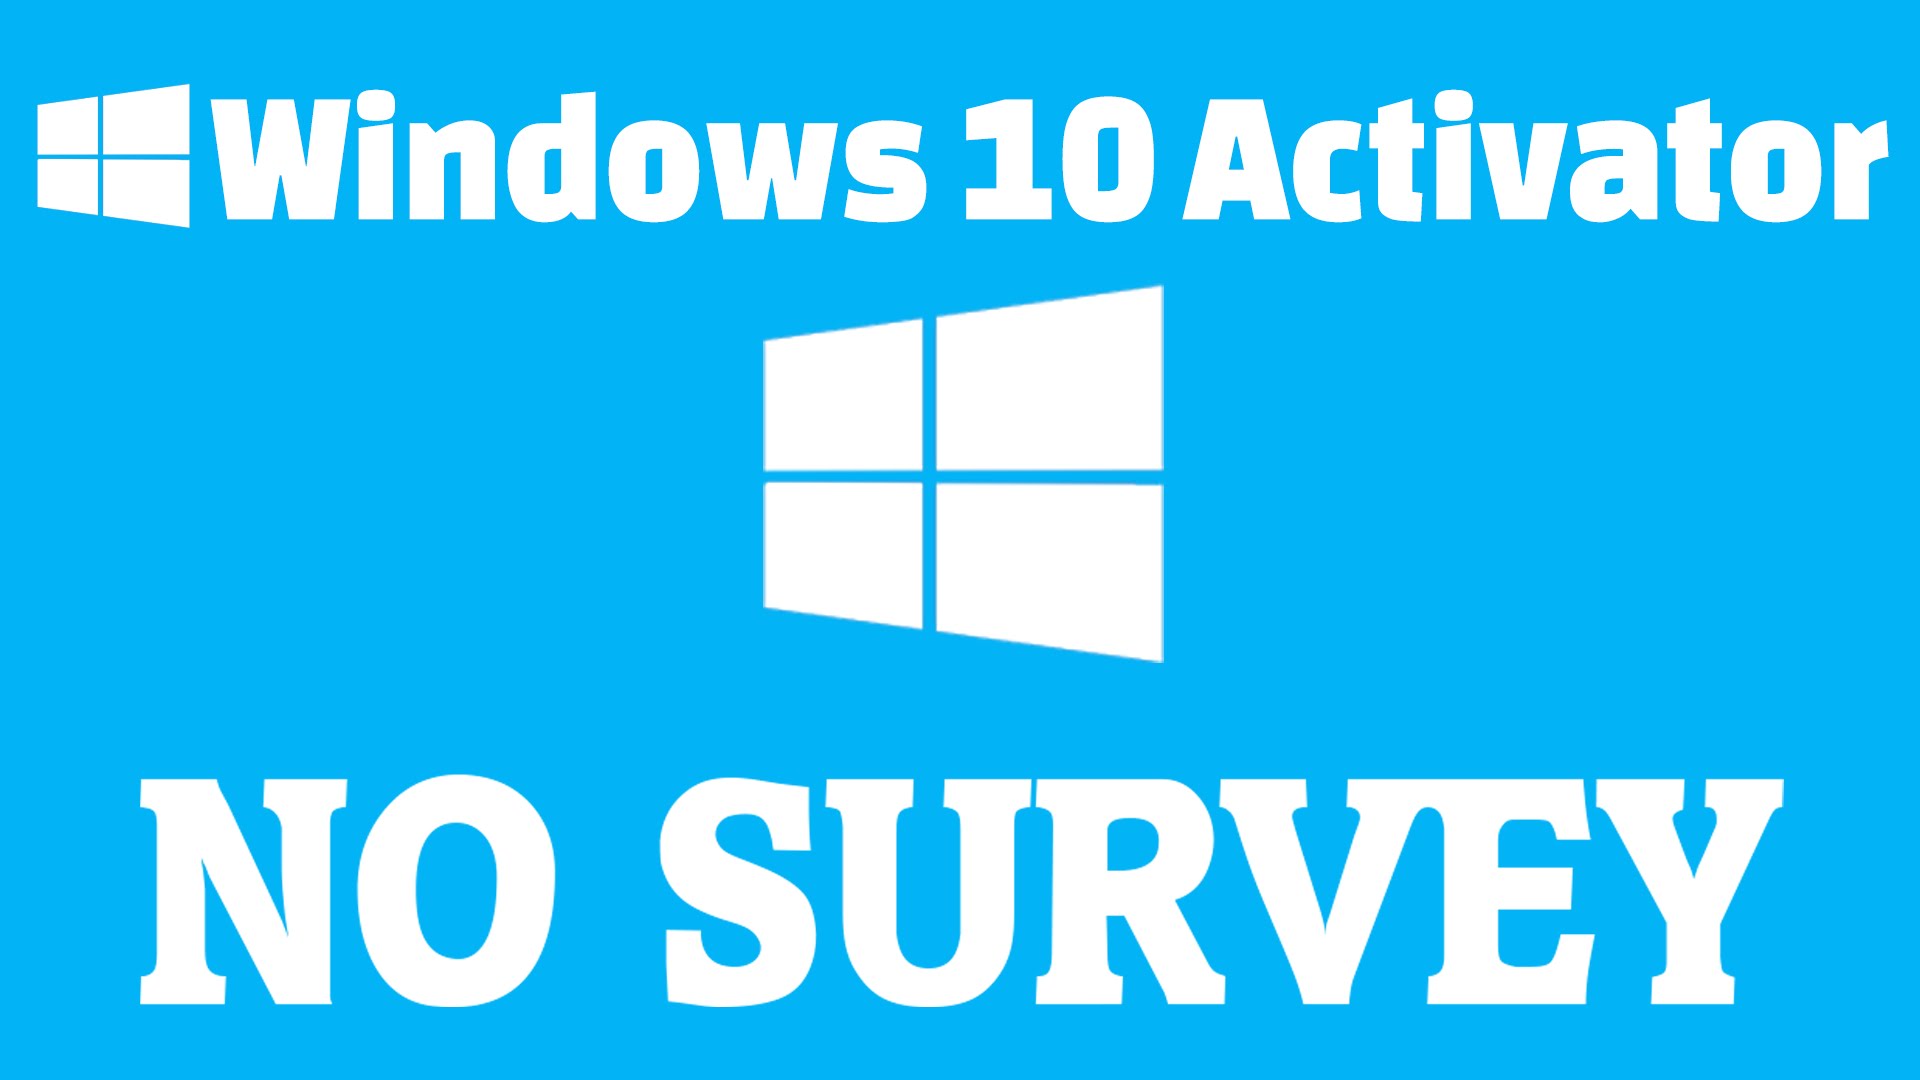 Активатор 10 home. Активатор Windows. Активатор Windows 10. Активация Windows 10. Activation Windows 10.